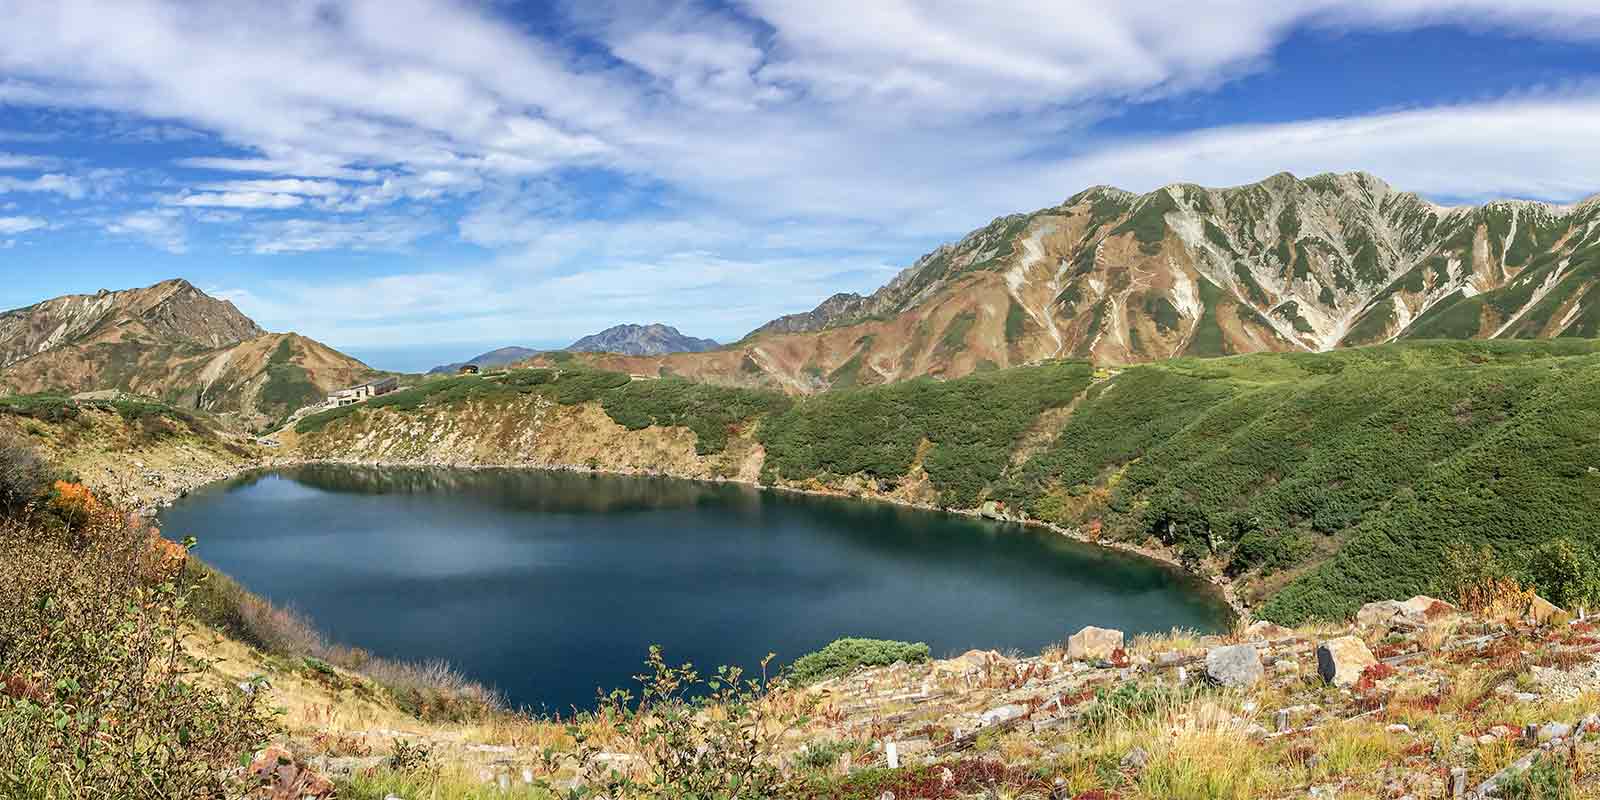 View of Murodo Peak with lake below in the Japanese Alps